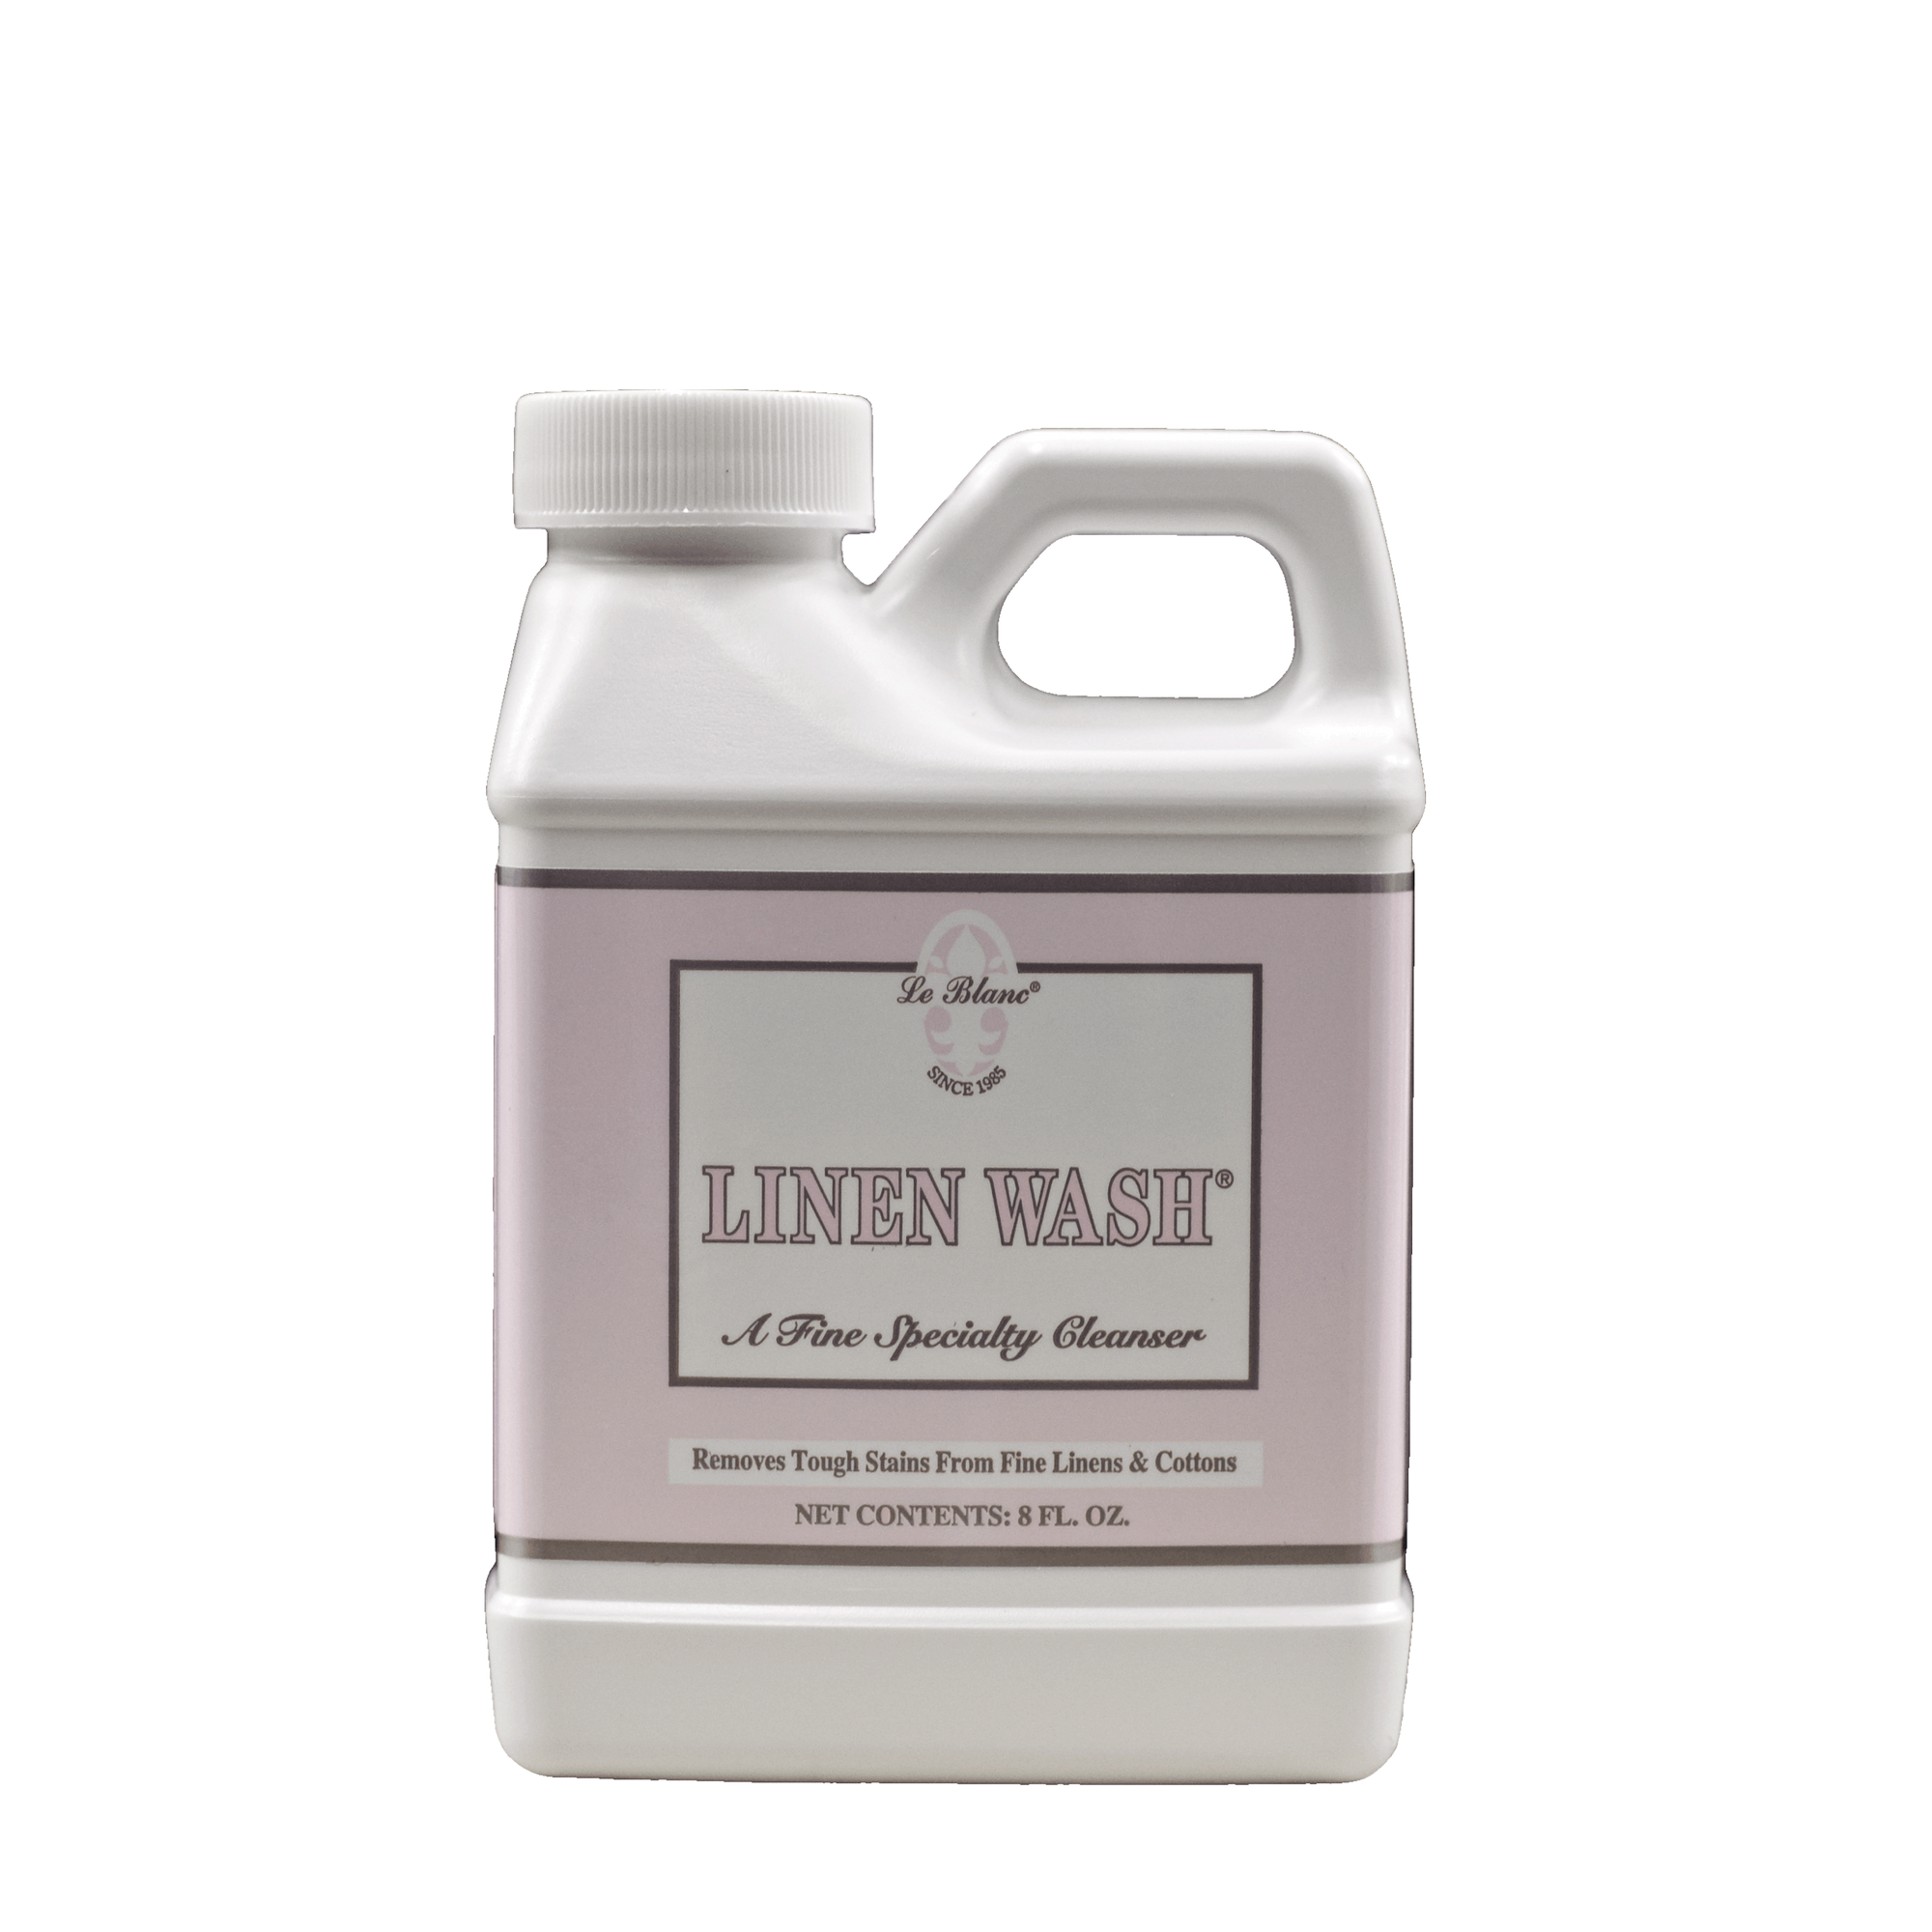 Le Blanc Linen Wash Original has a floral and fresh fragrance.